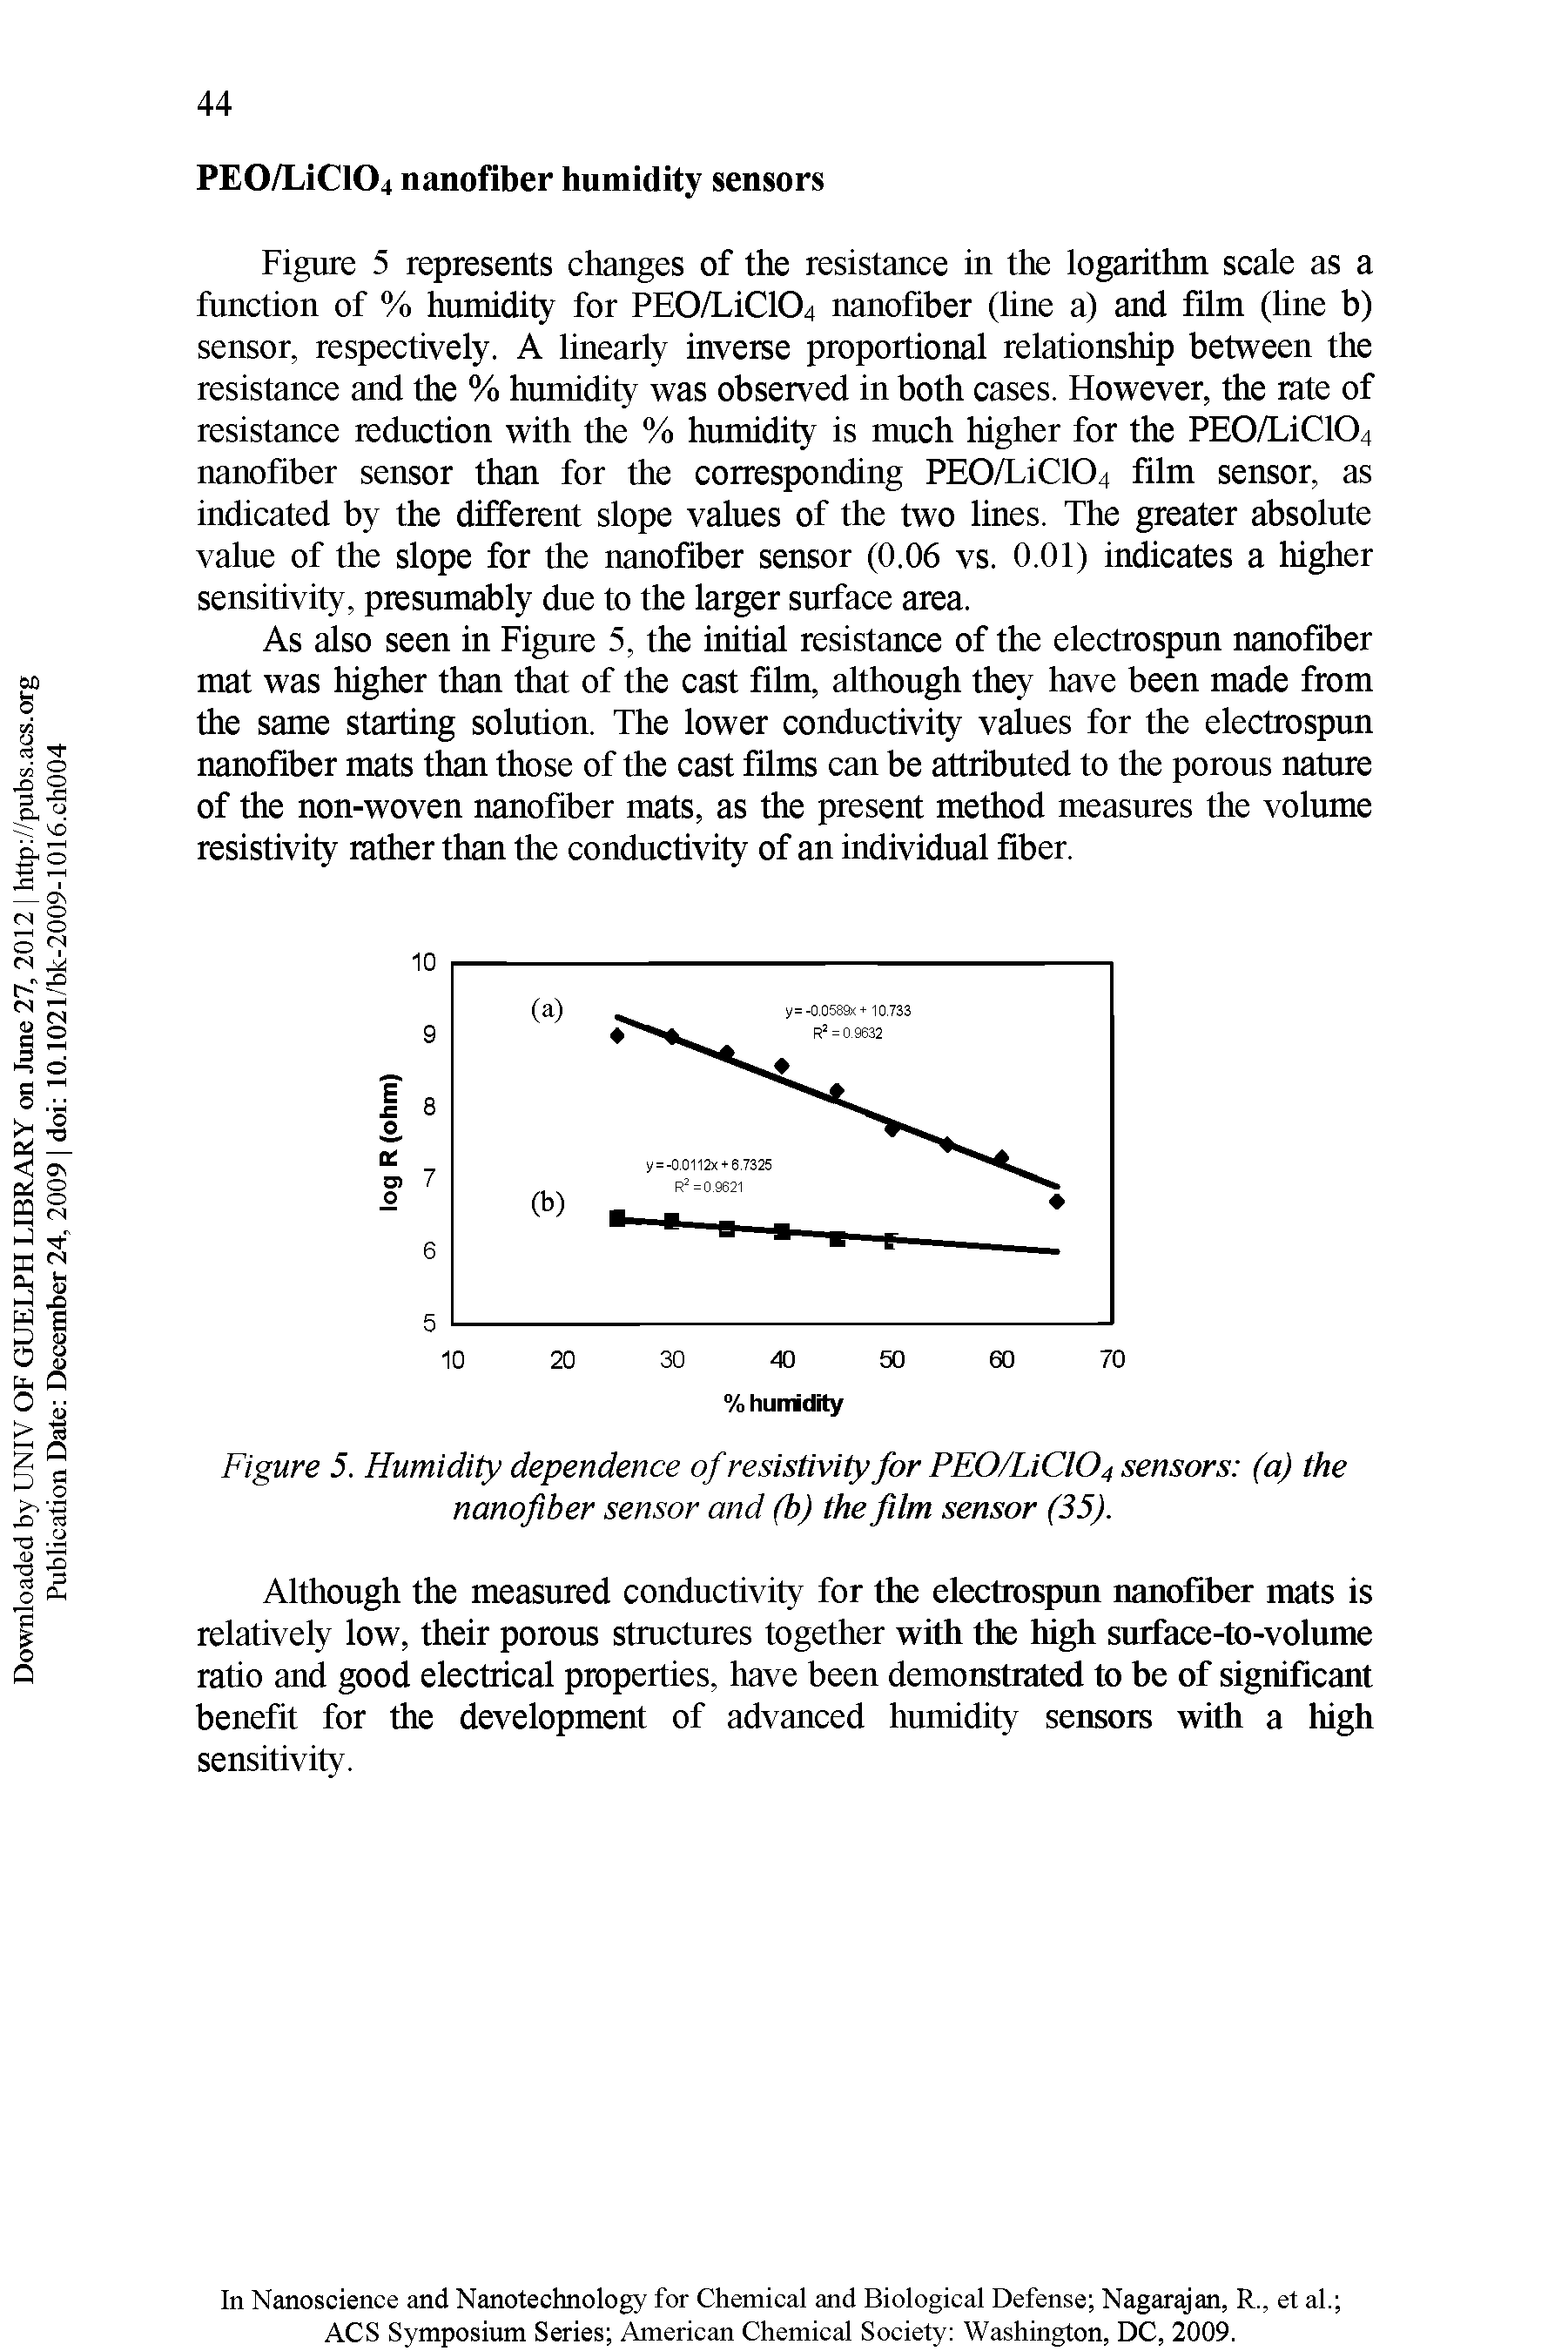 Figure 5. Humidity dependence of resistivity for PE0/LiCl04 sensors (a) the nanofiber sensor and (b) the film sensor (35).